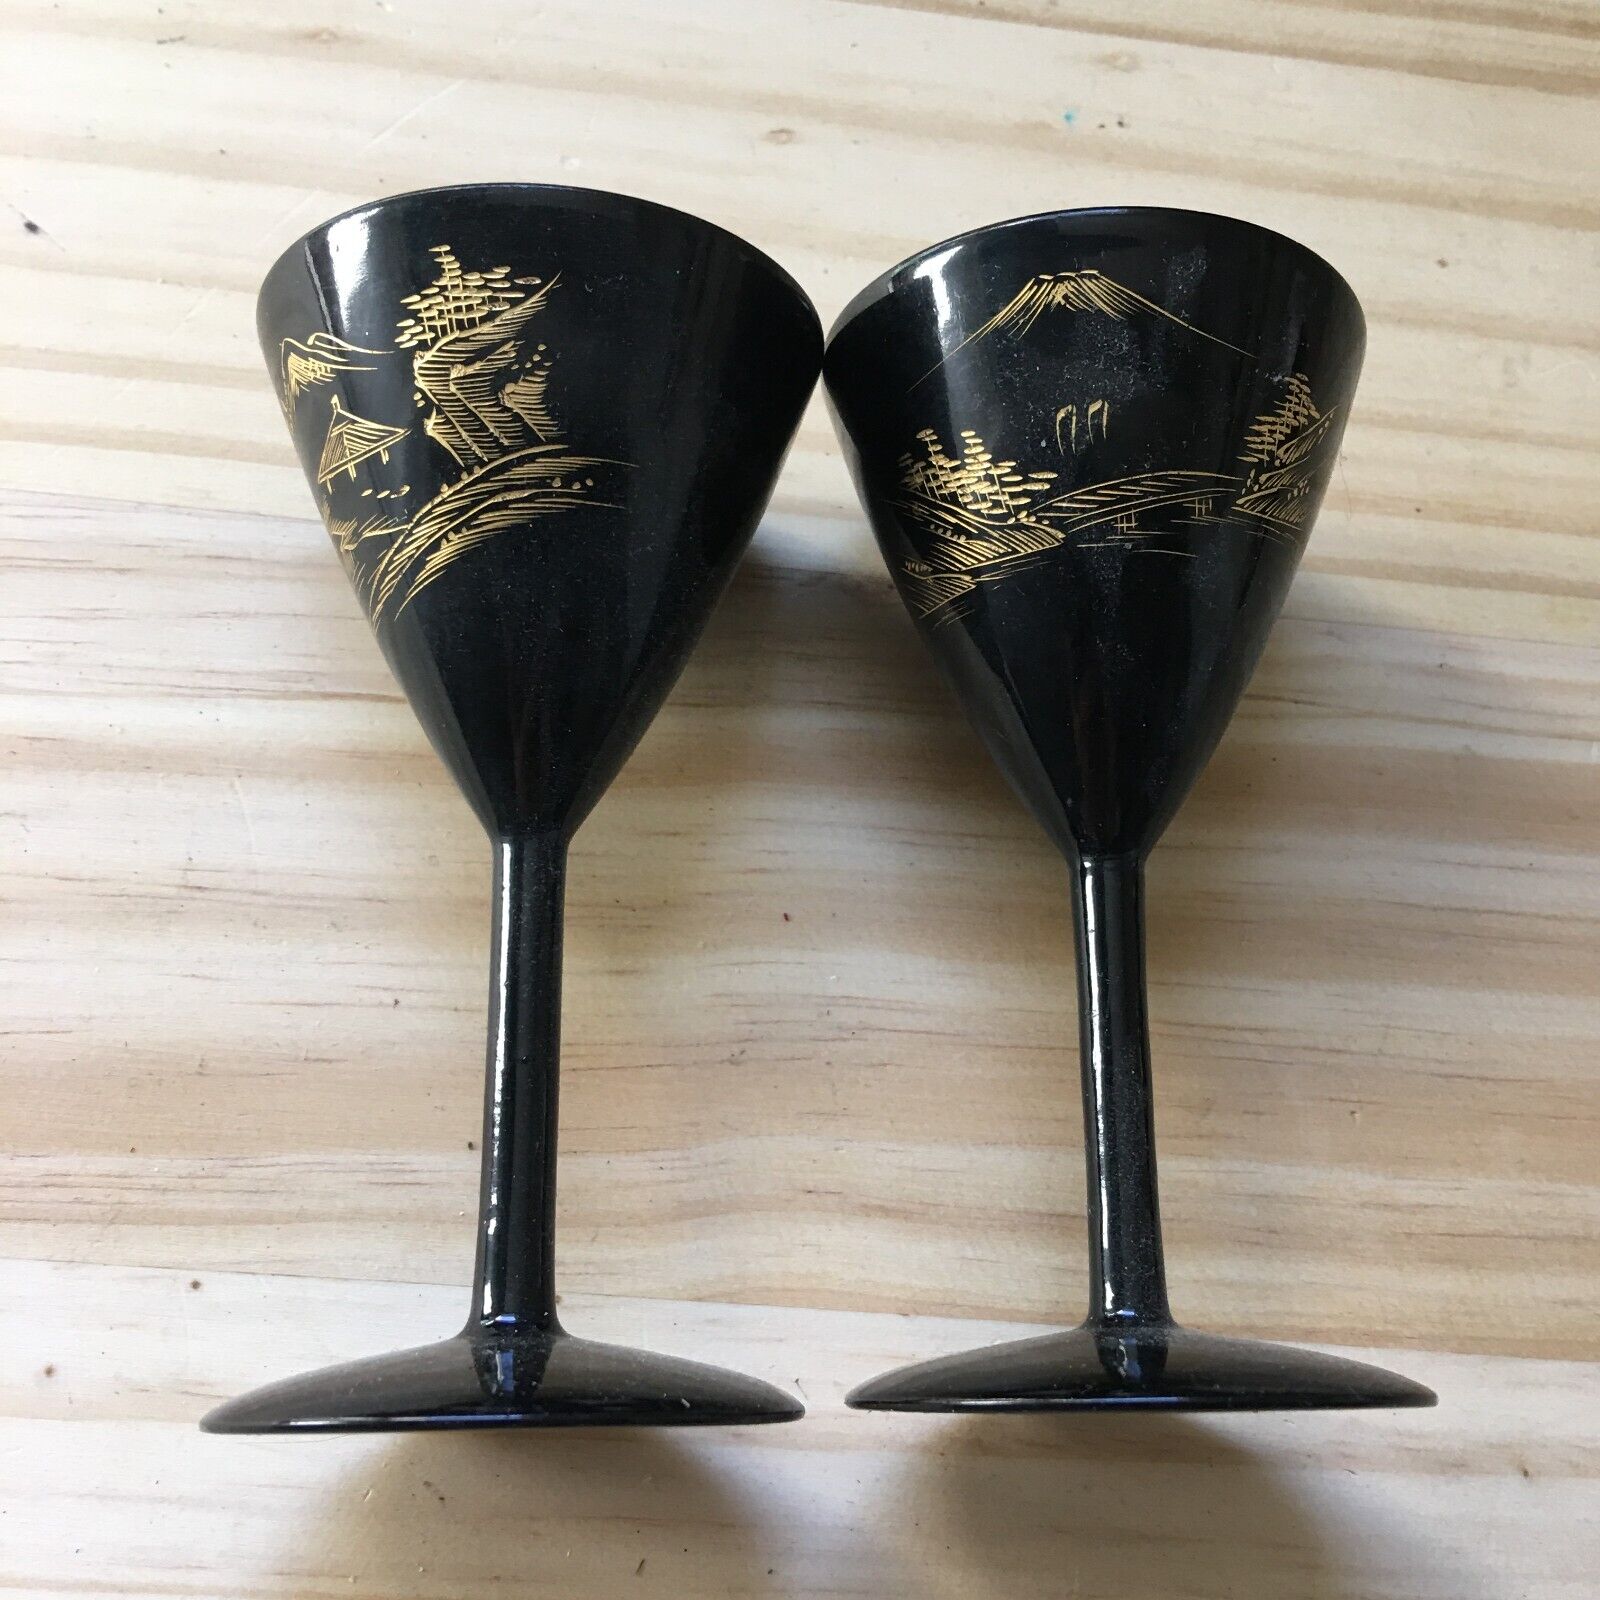 Vintage Pair of Japanese Black & Gold Lacquer Wood Stemmed Sake Glasses Goblet